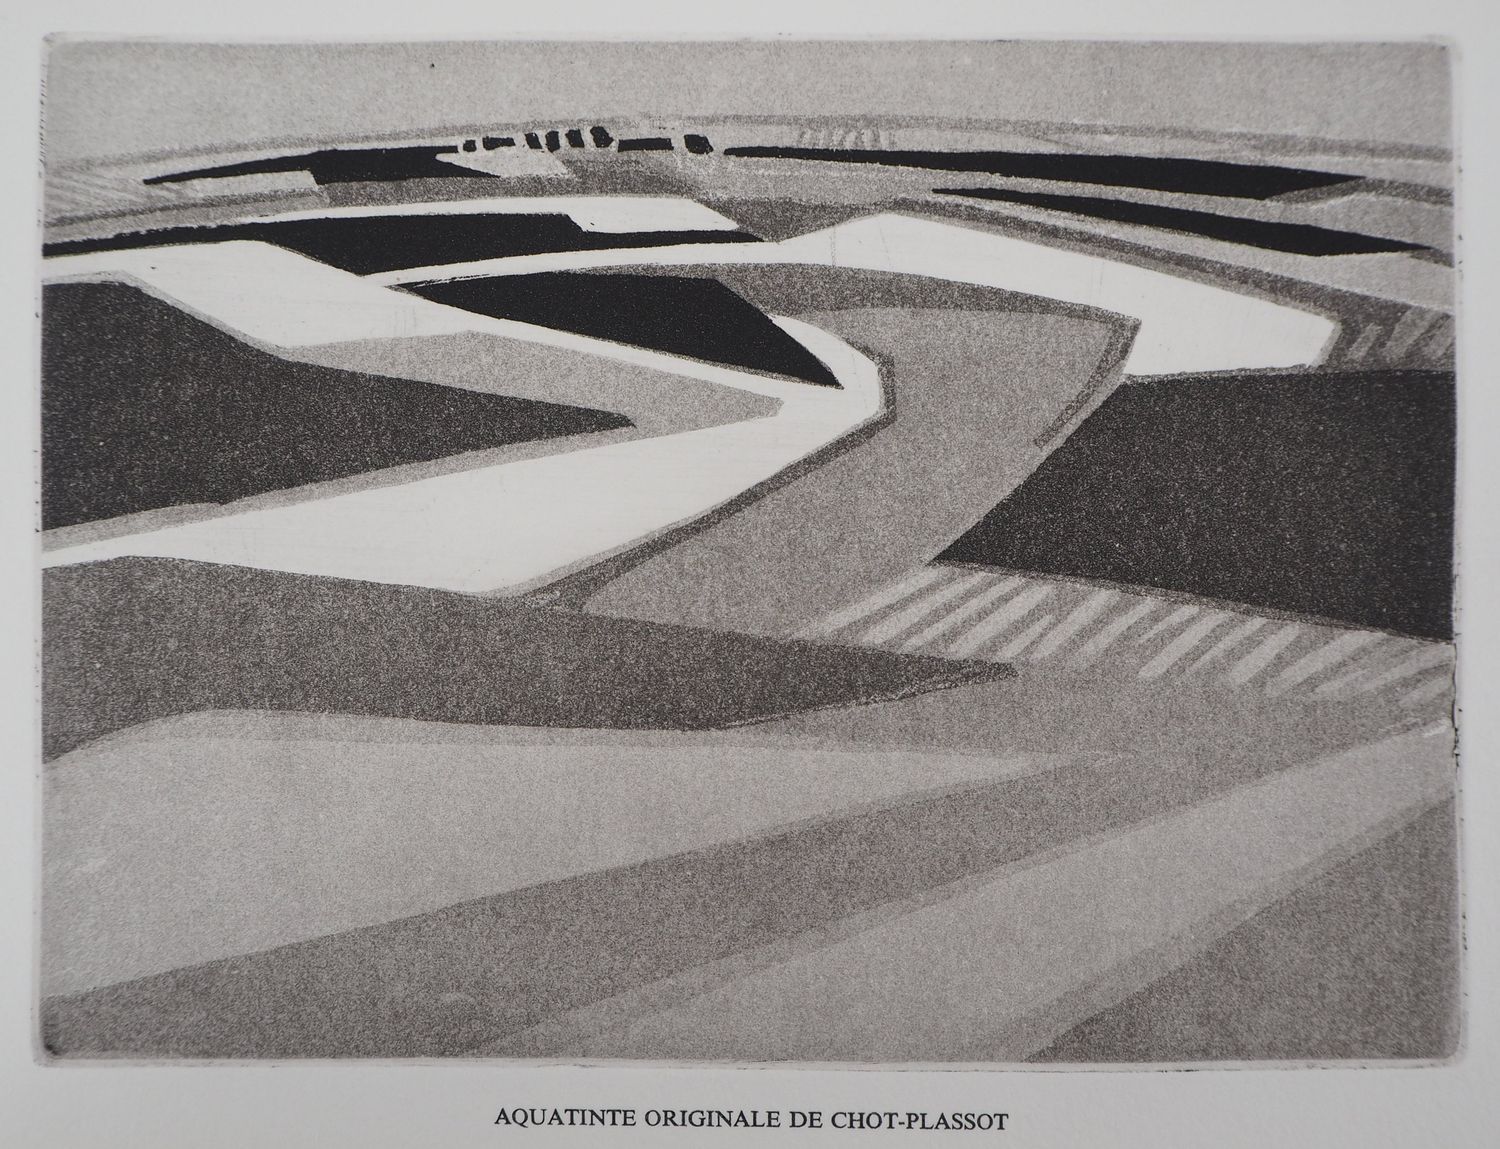 Null Maurice CHOT-PLASSOT

平原，1984年

牛皮纸上的原始水印

16 x 22 cm (闭合格式)

状况极佳

为1984年法&hellip;